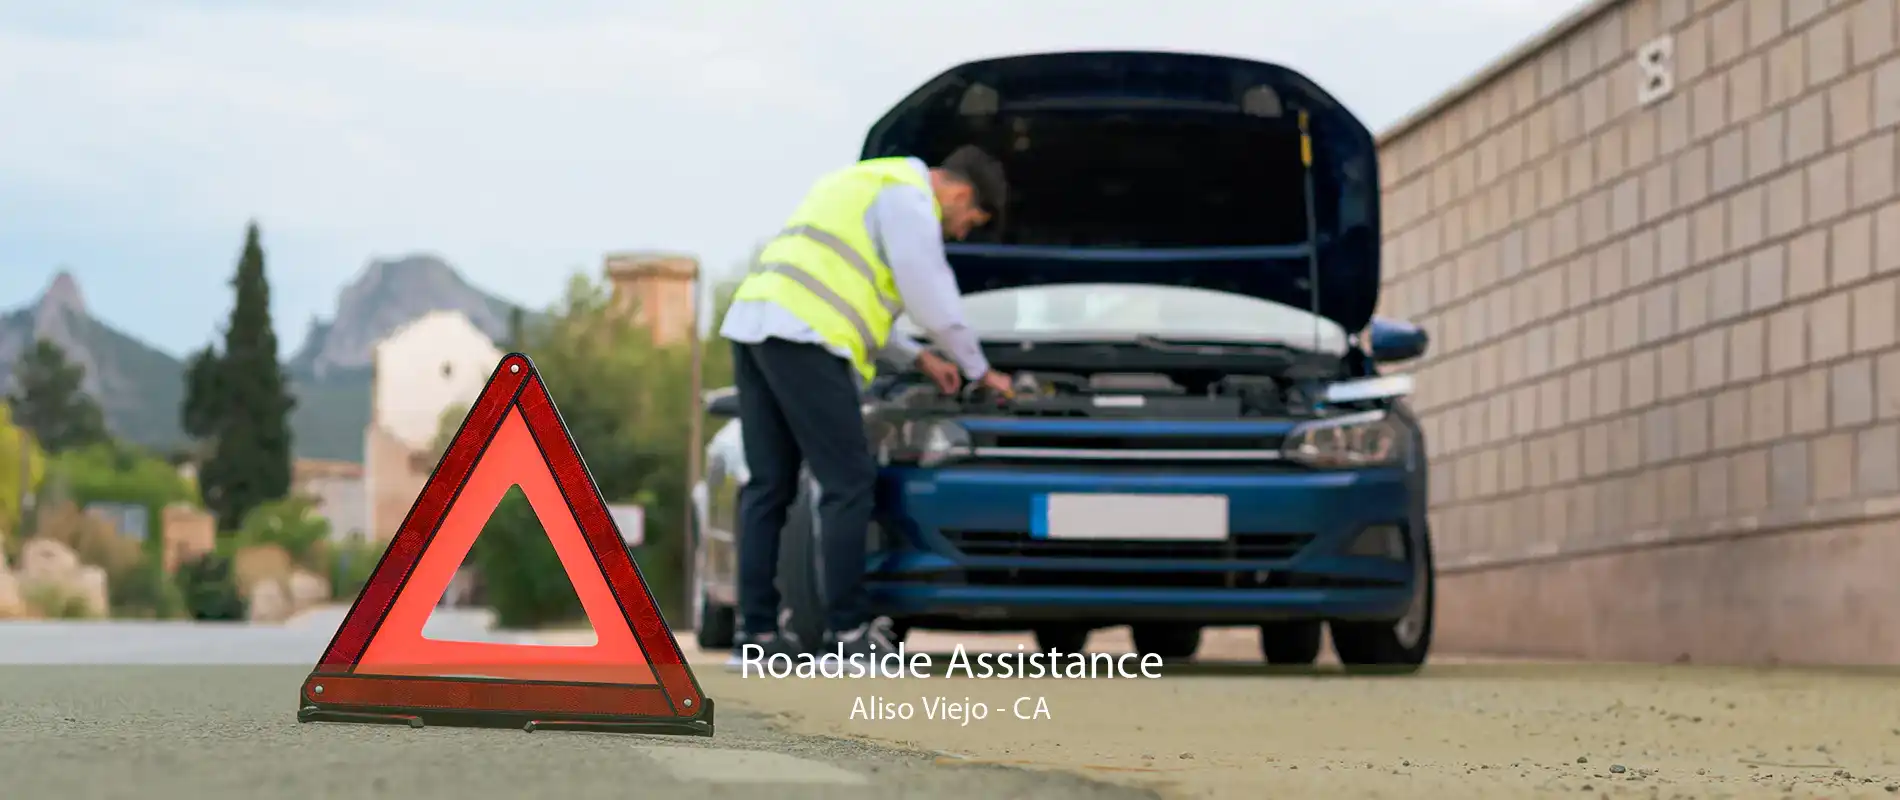 Roadside Assistance Aliso Viejo - CA